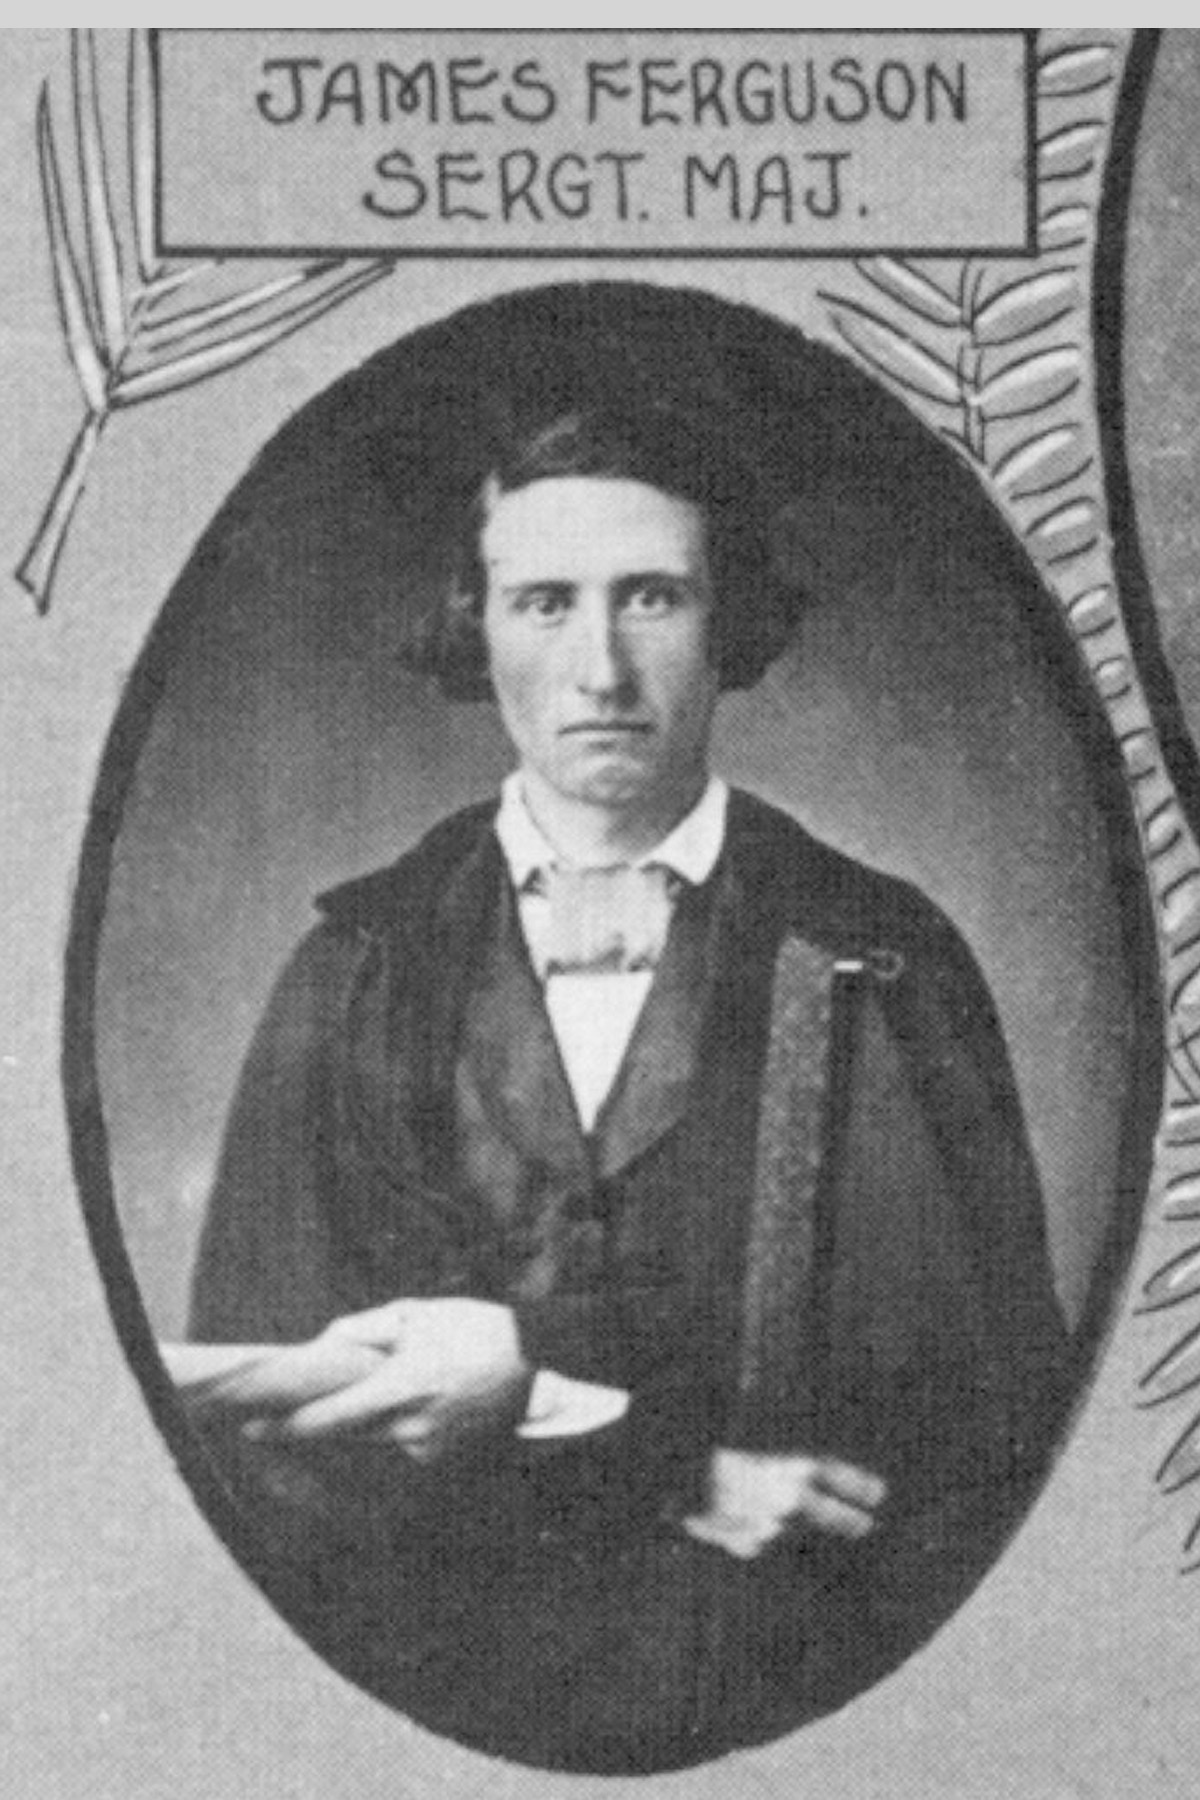 Sergt. Major James Ferguson 1828-1863